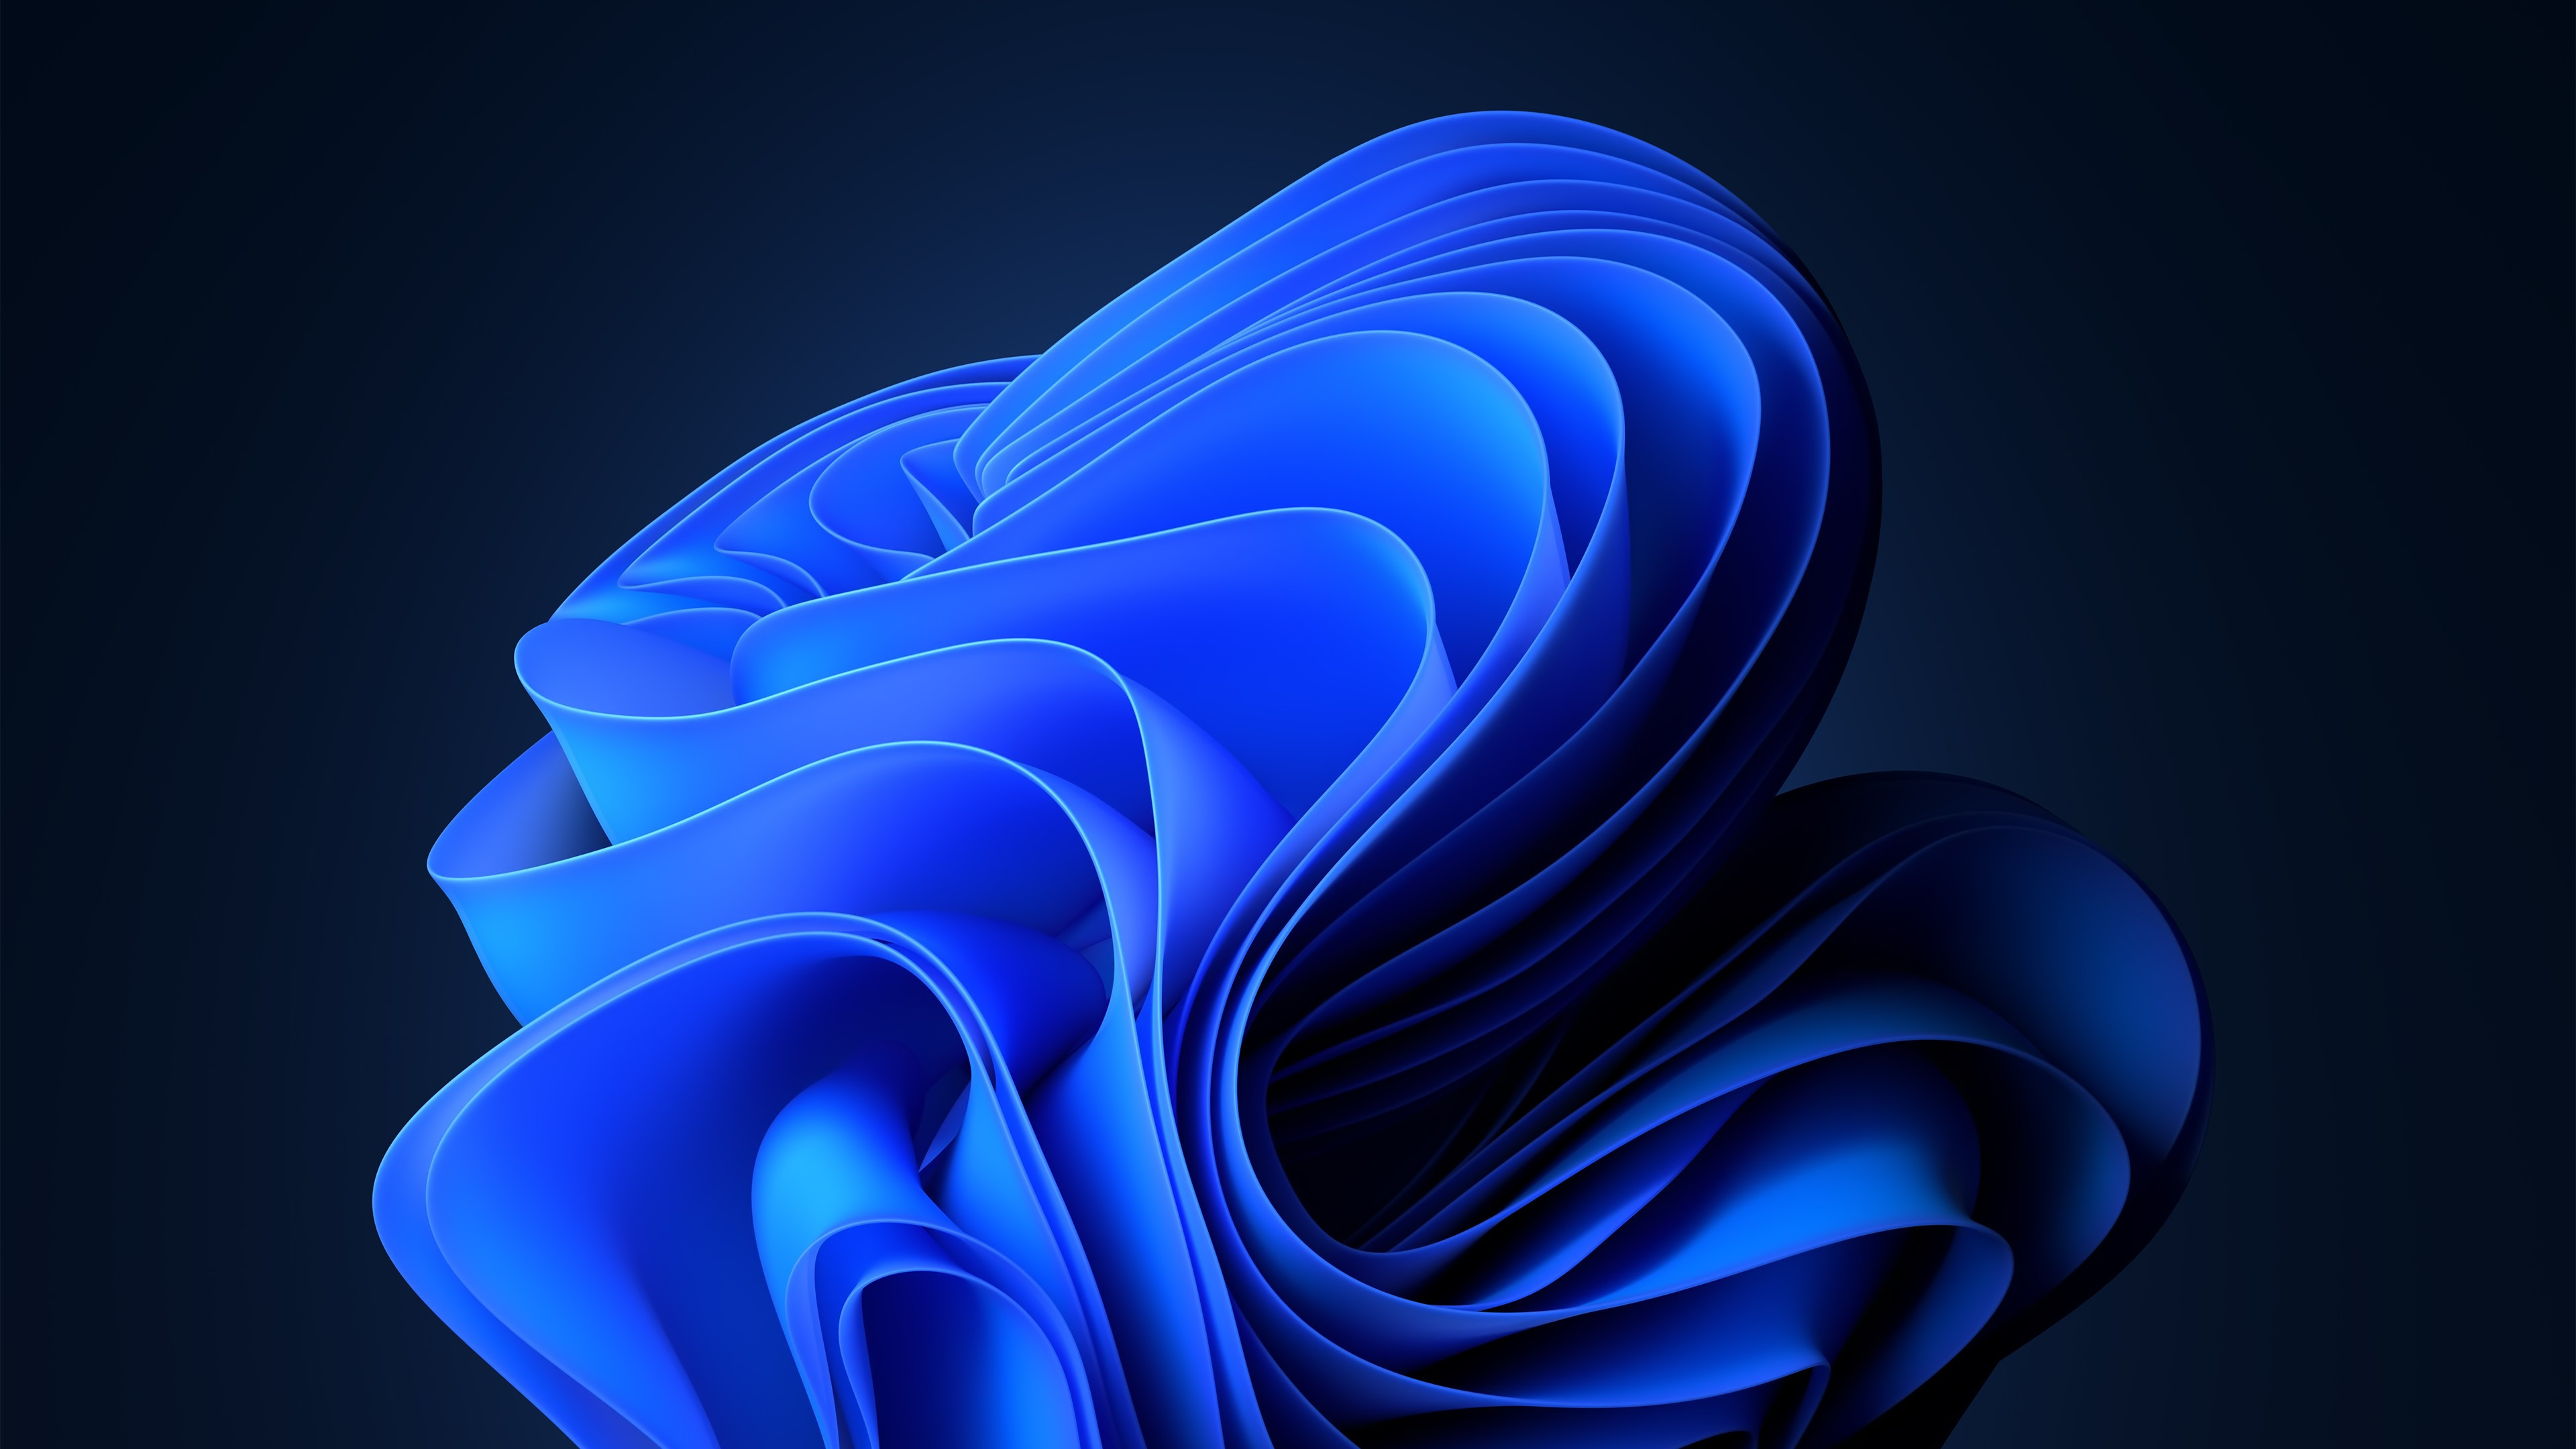 Windows 11 blue abstract wallpaper 3840x2160